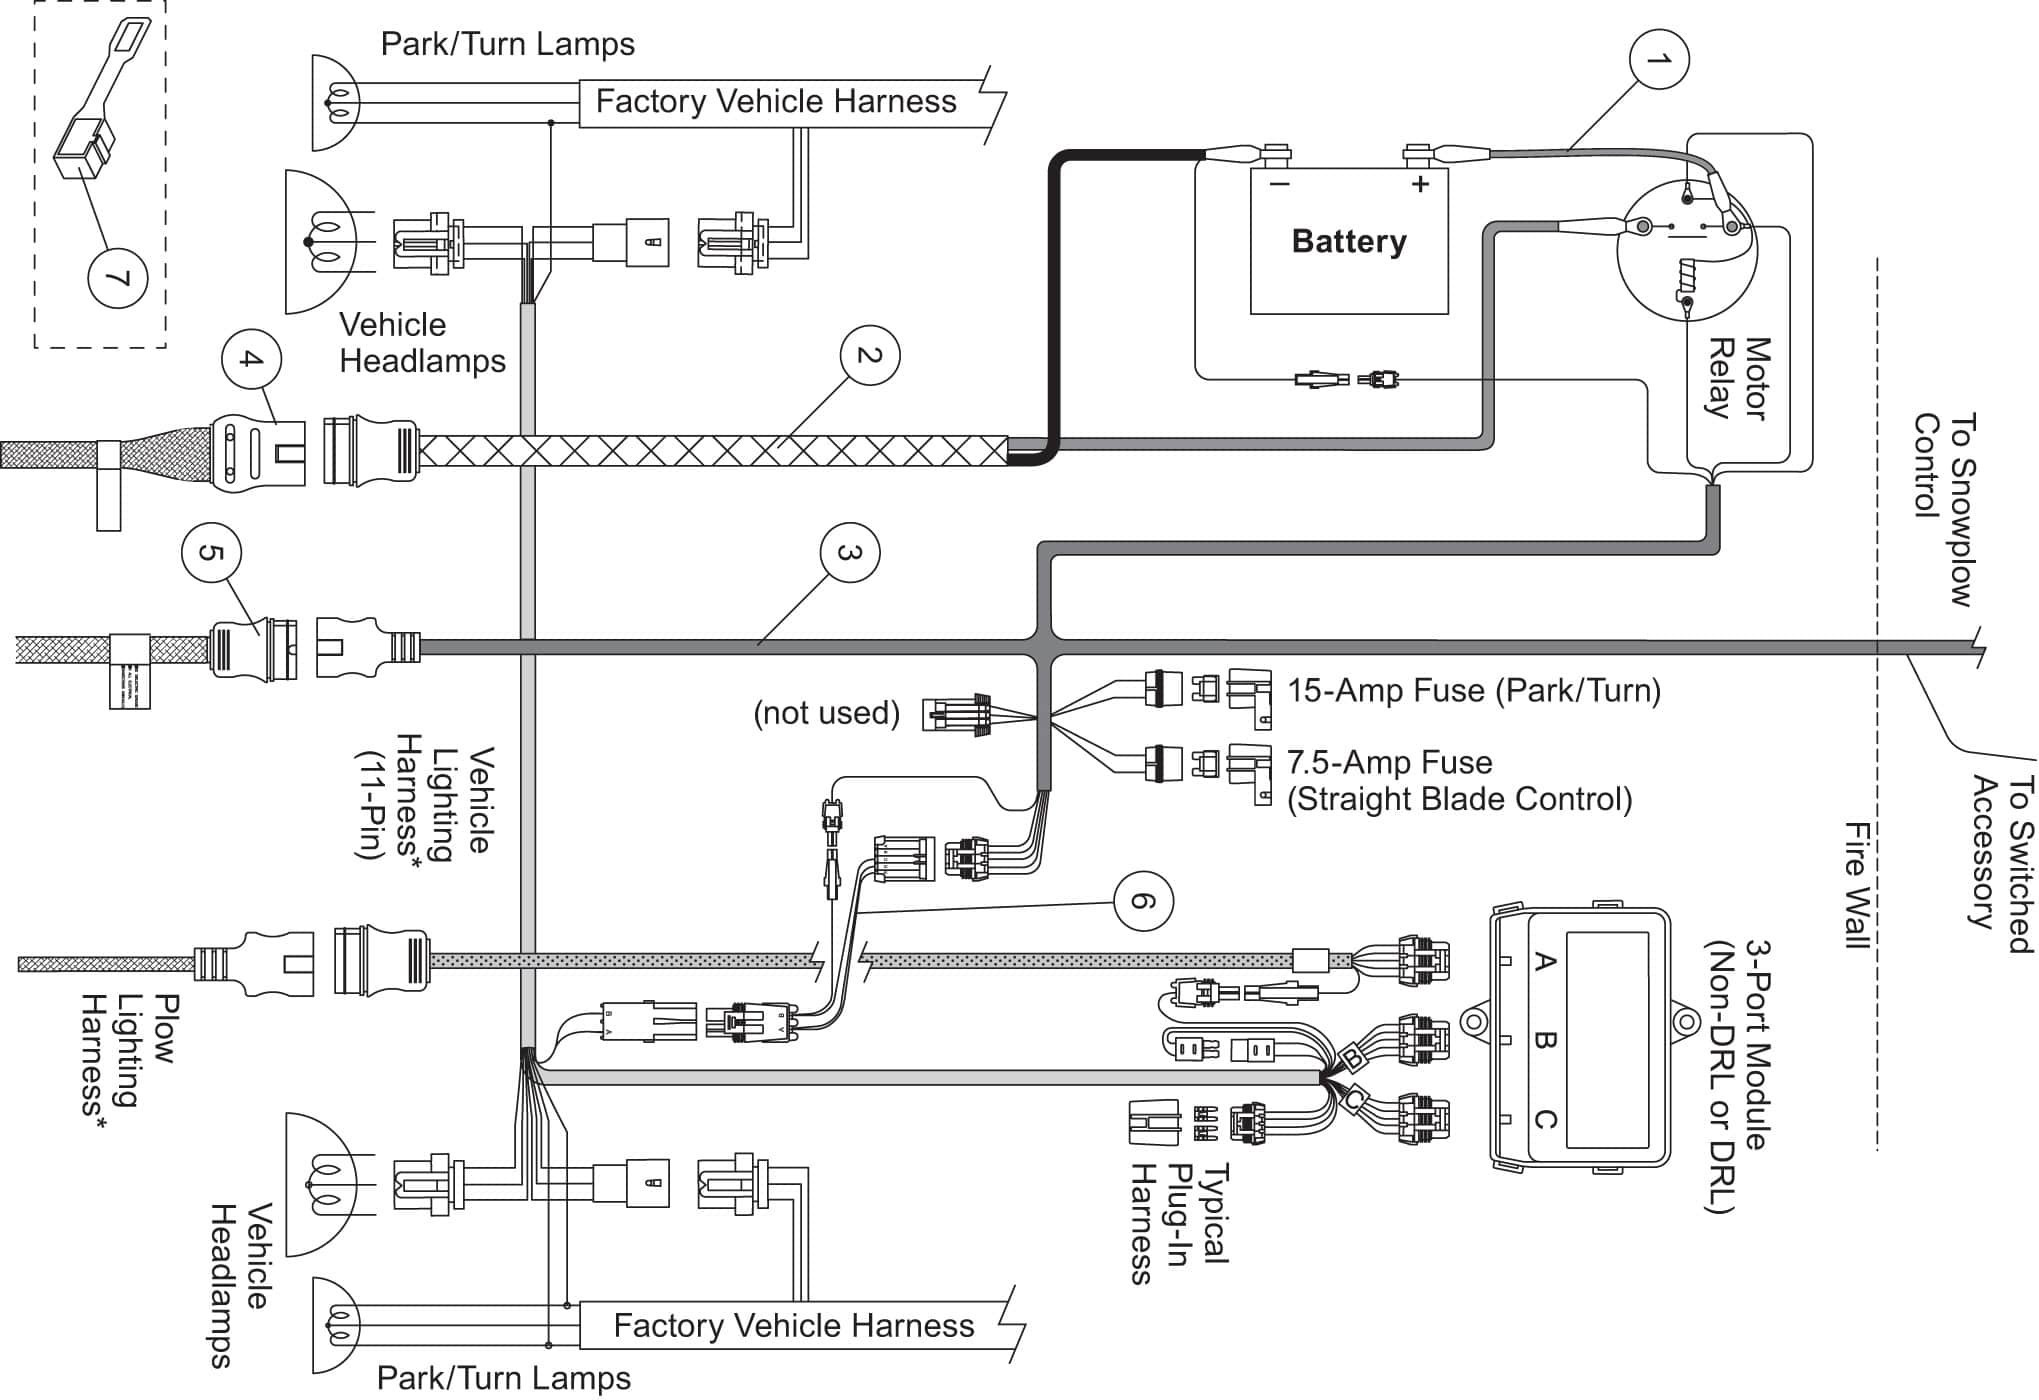 Meyer Snow Plow Wiring Diagram Elegant Plow Wiring Diagram Free In Boss and Meyer Bunch Ideas